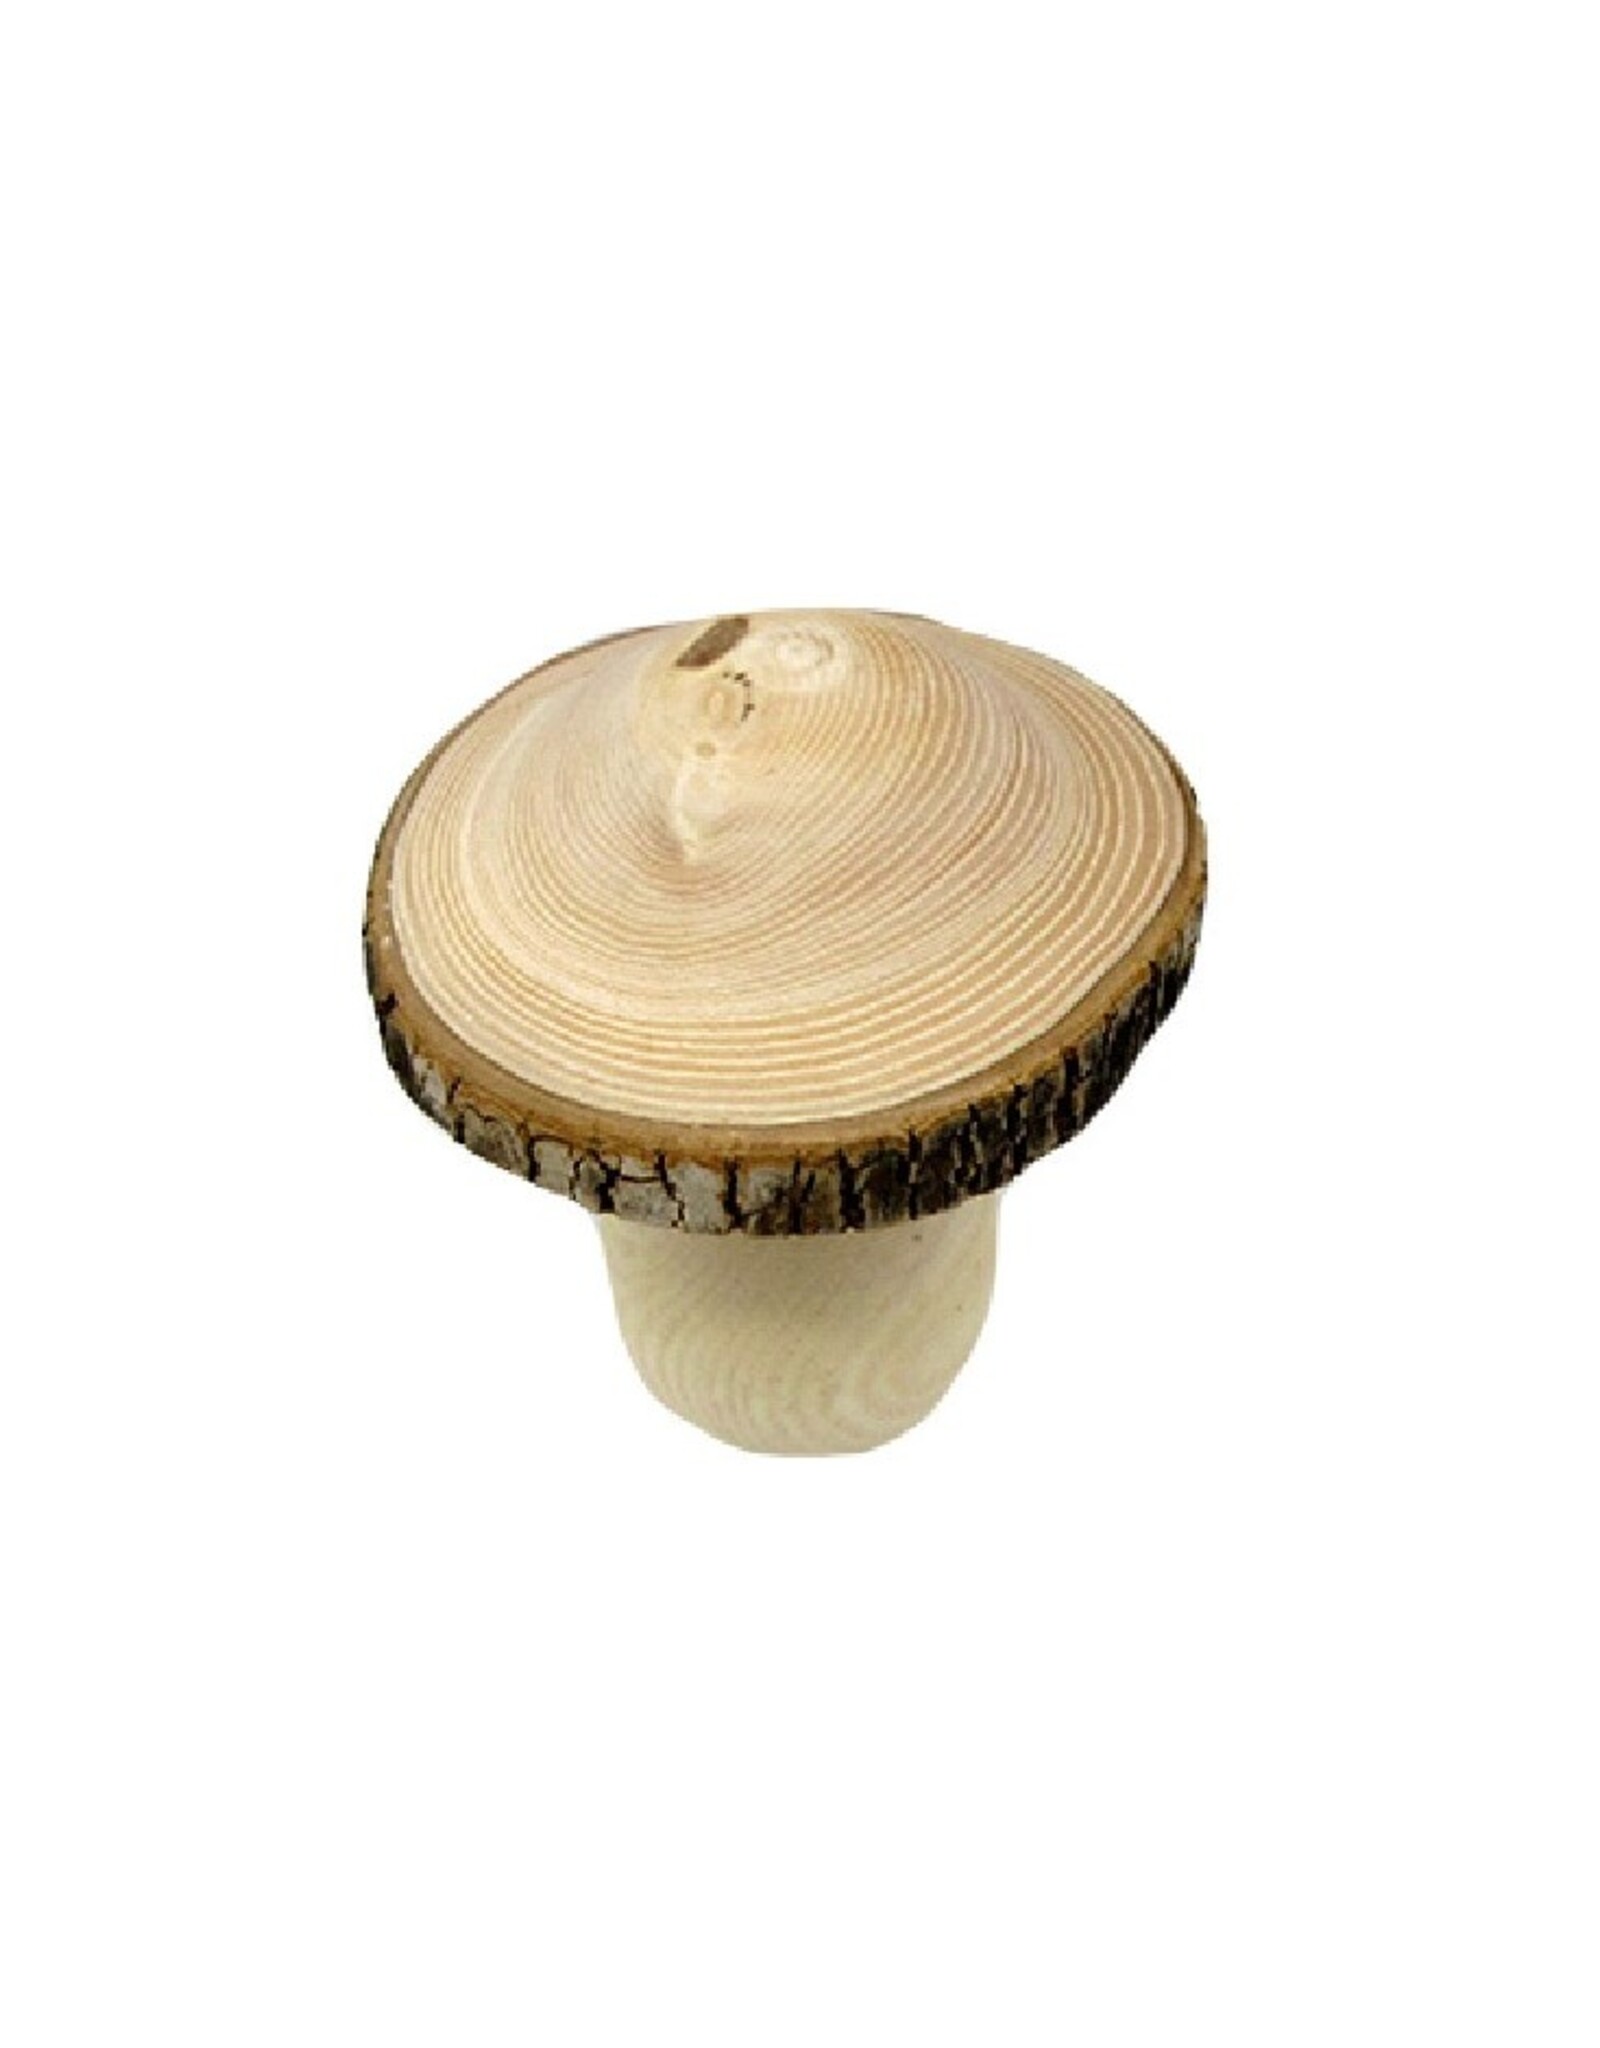 Koppers Wooden Mushroom, Small